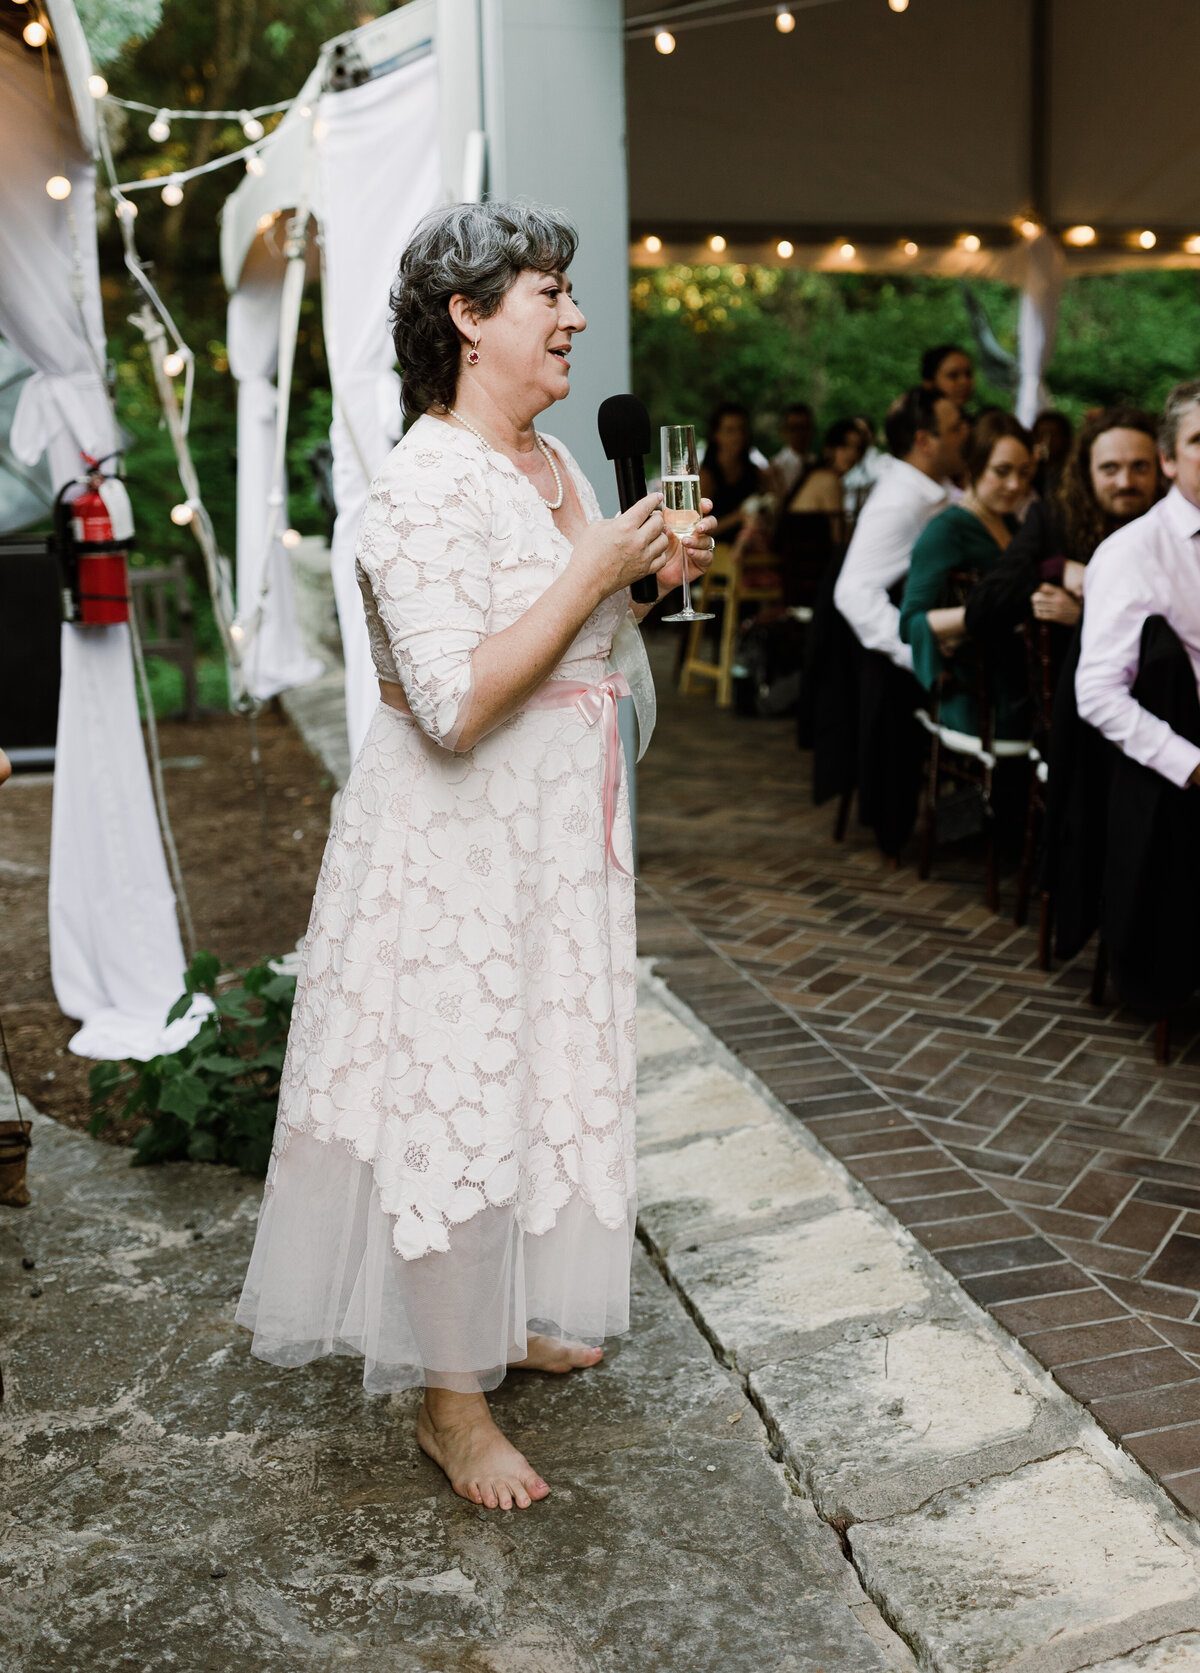 Woman making a speech at wedding reception at Umlauf Sculpture Garden, Austin